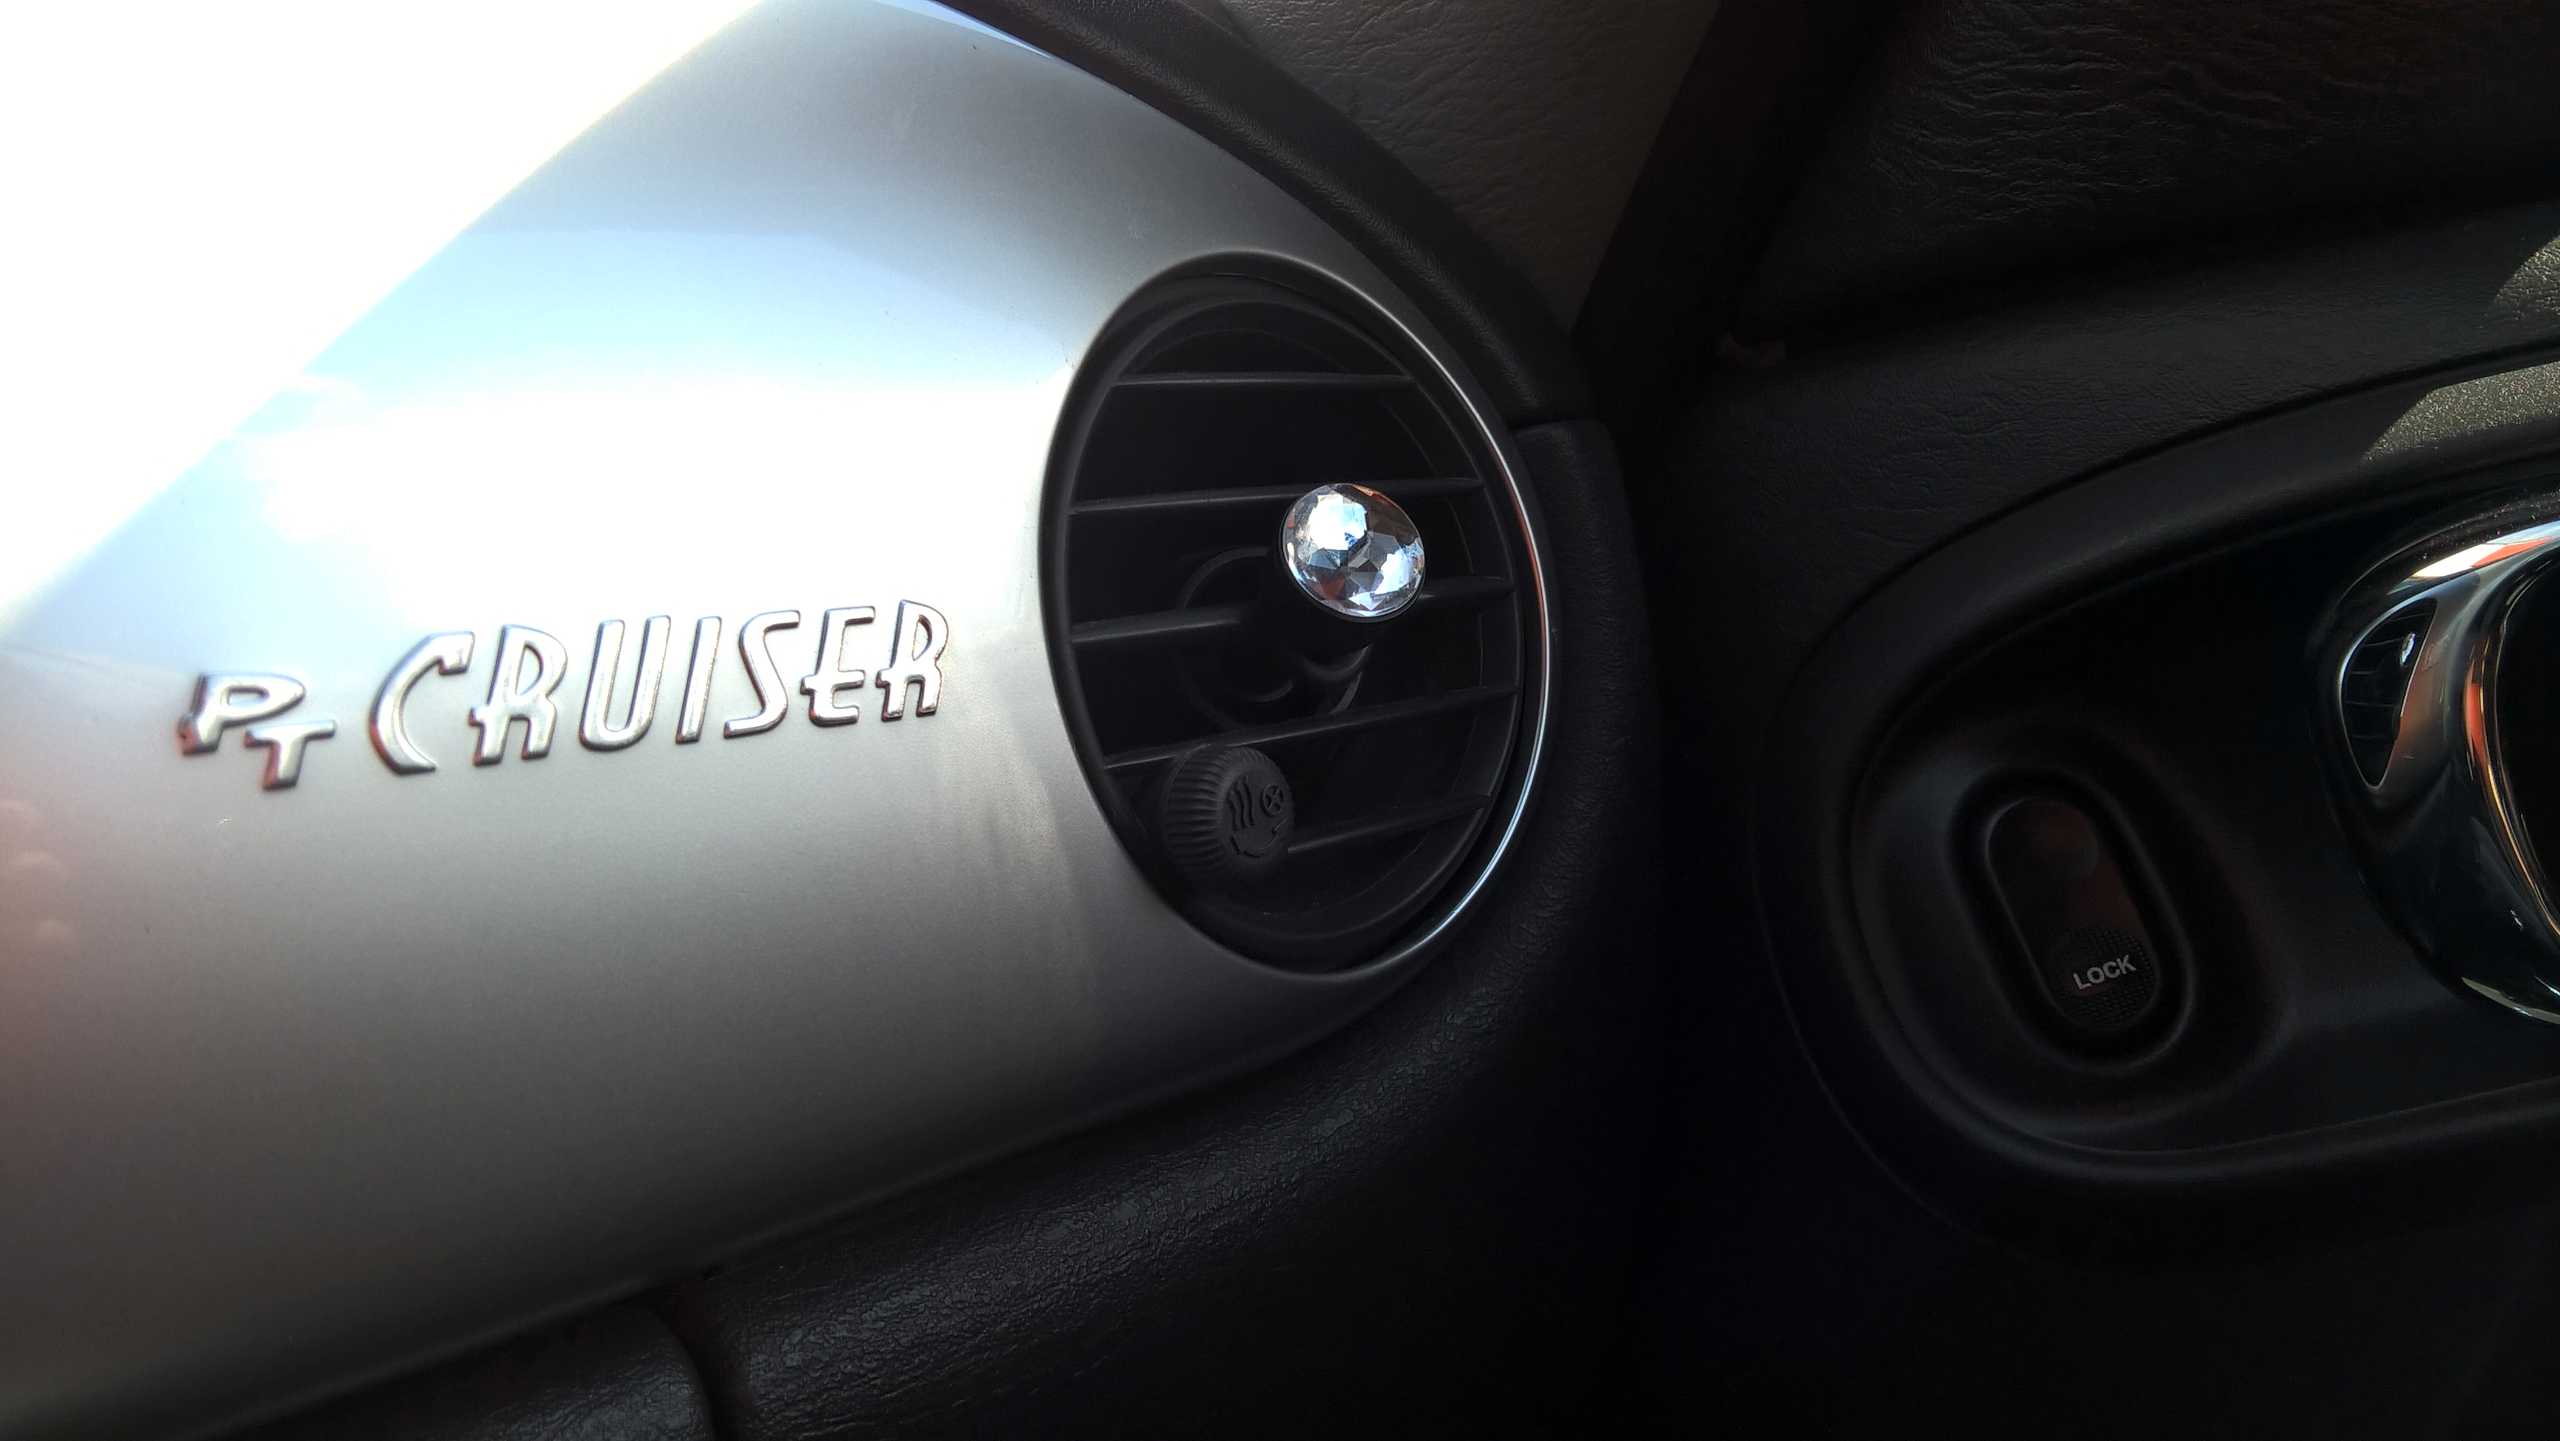 chrome PT Cruiser logo, silver dash panel, right circular vent, jewel knob, 2005 Chrysler PT Cruiser GT